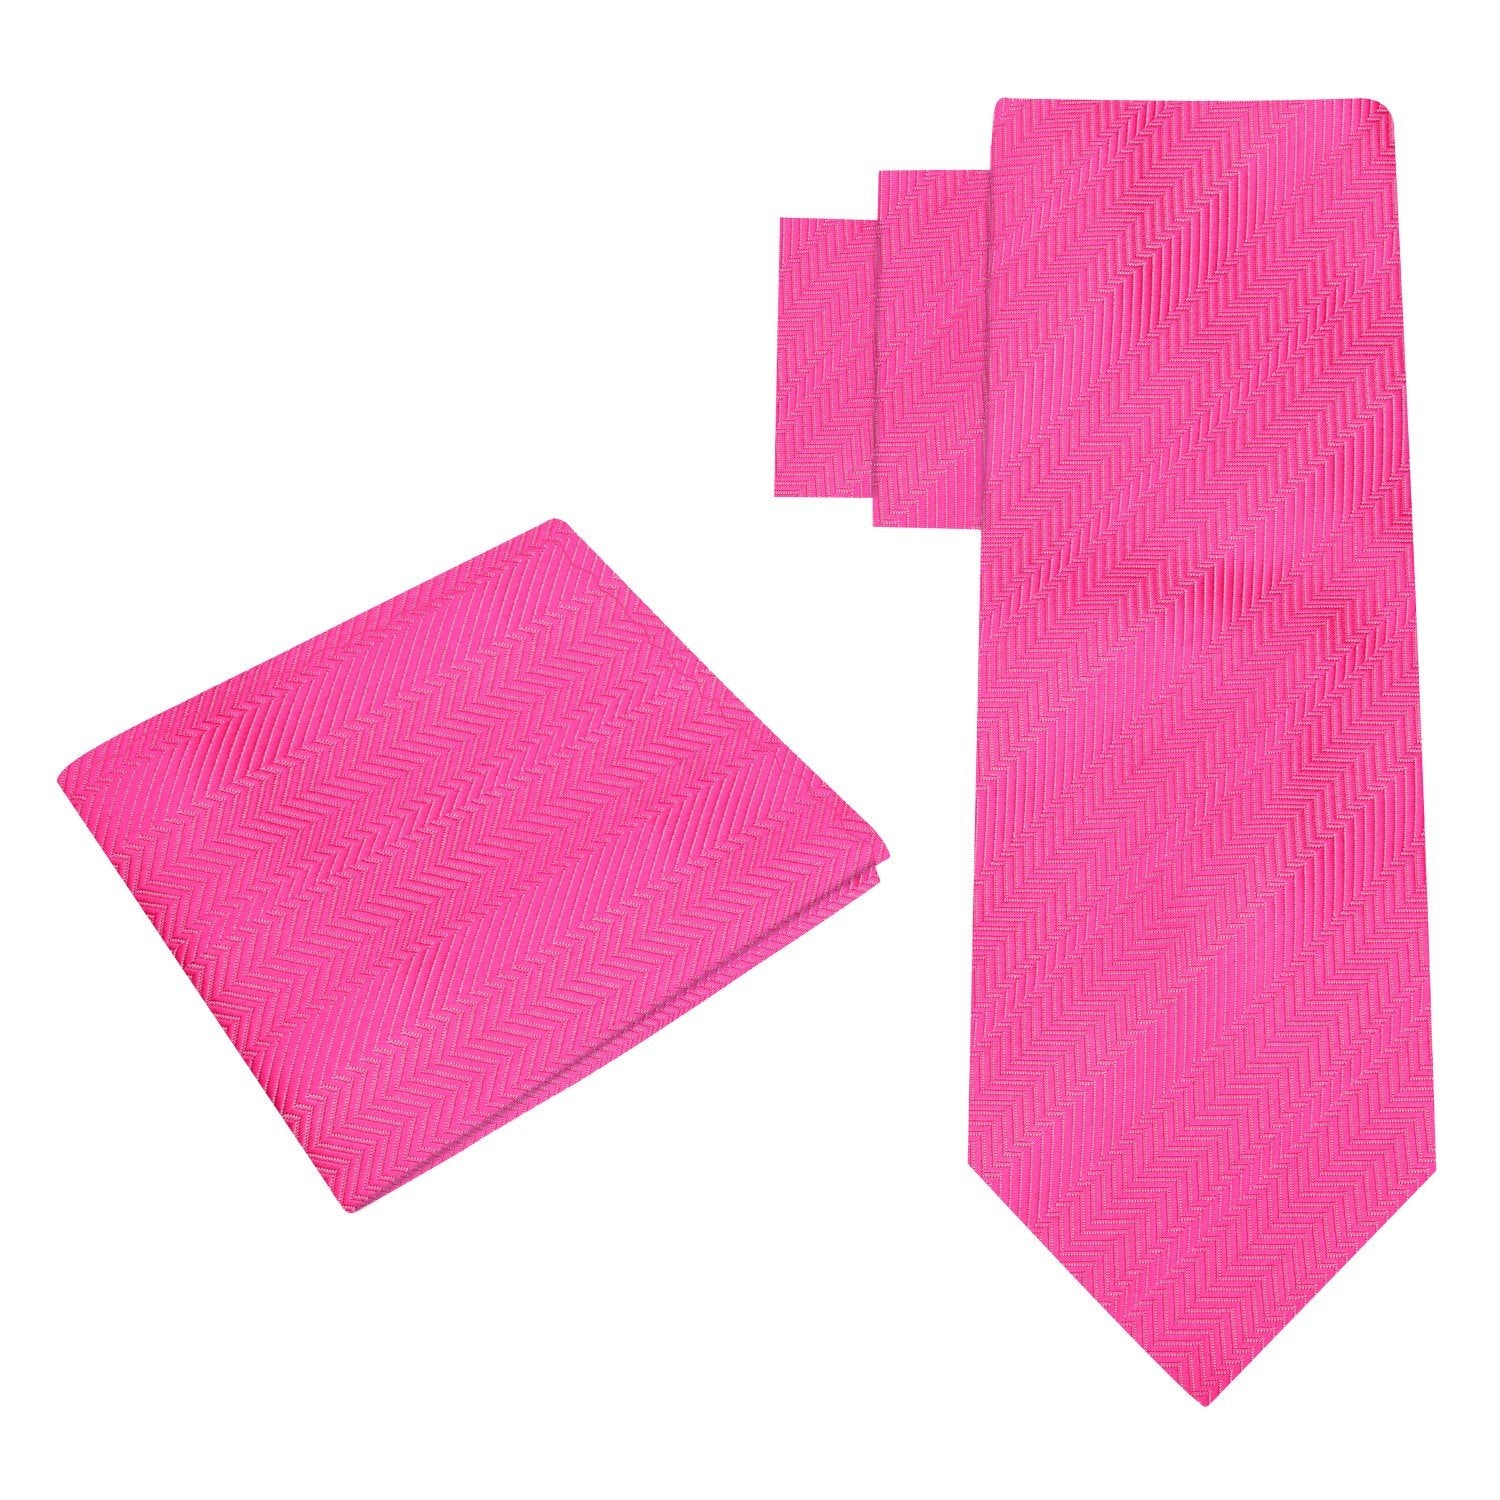 Alt ViewL A Solid Fandango Pink Pattern Silk Necktie, Matching Pocket Square